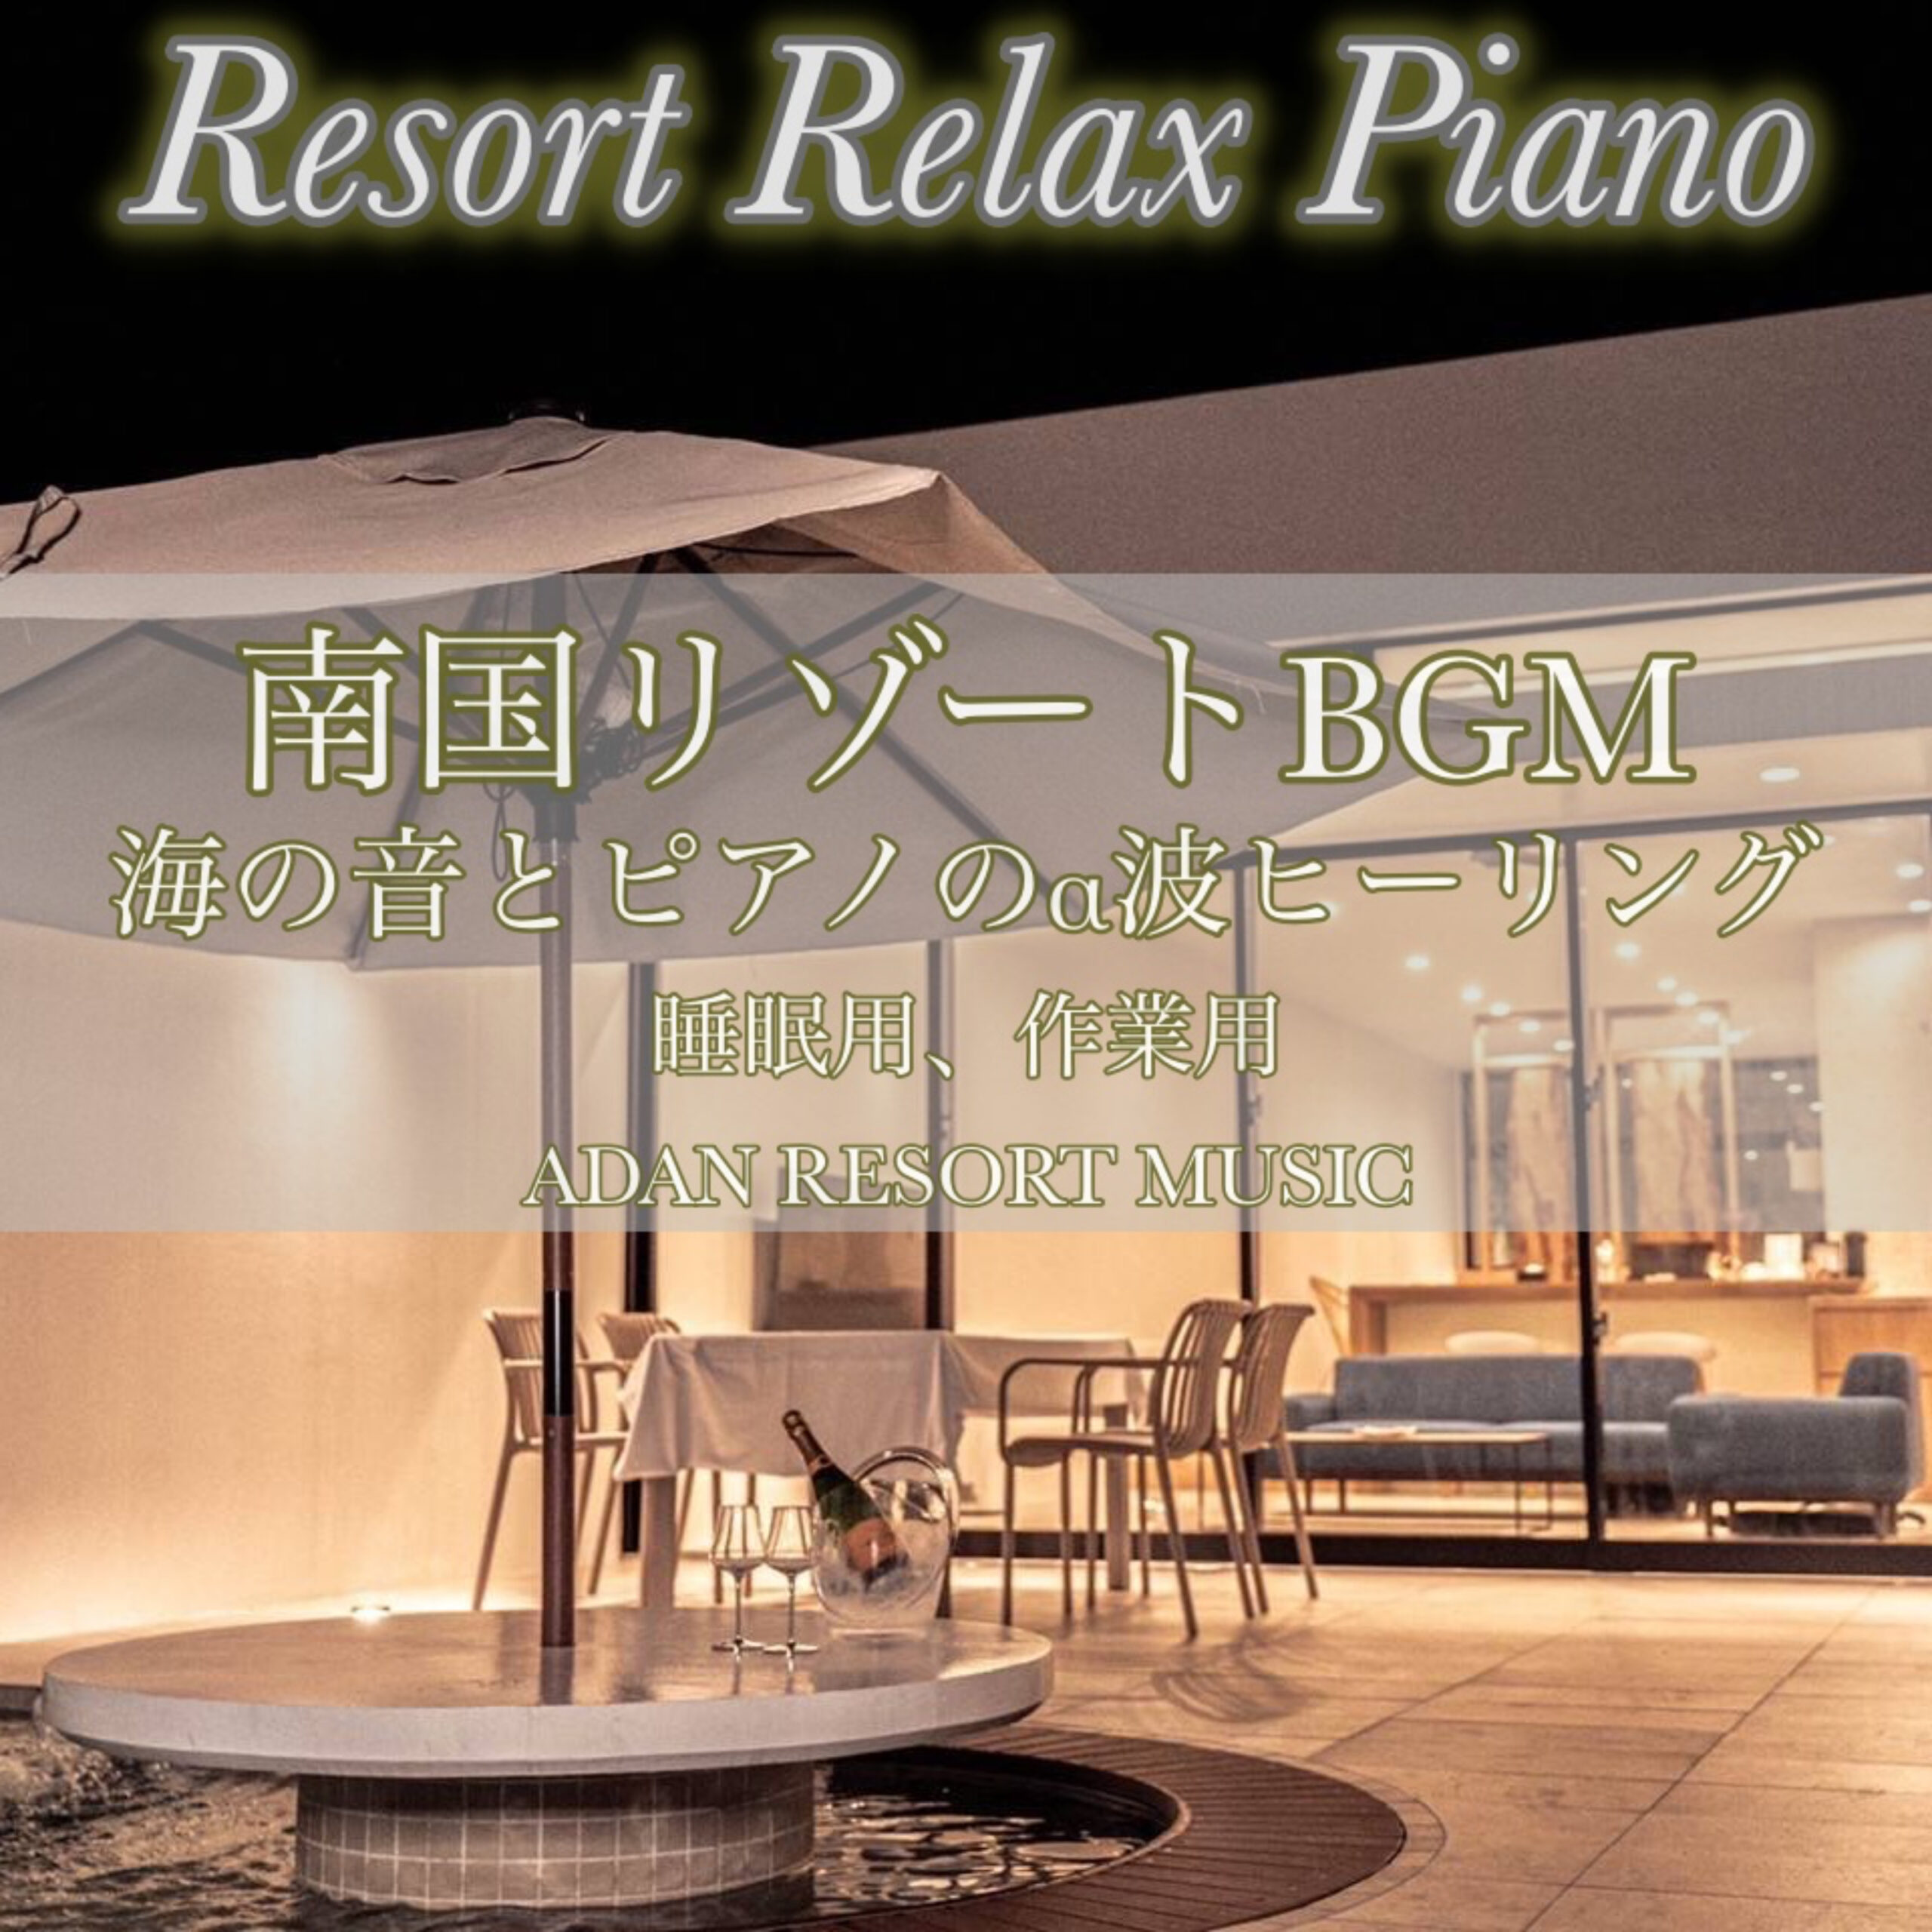 Resort Relax Piano 南国リゾートBGM 海の音とピアノのα波ヒーリング 睡眠用、作業用 ADAN RESORT MUSIC